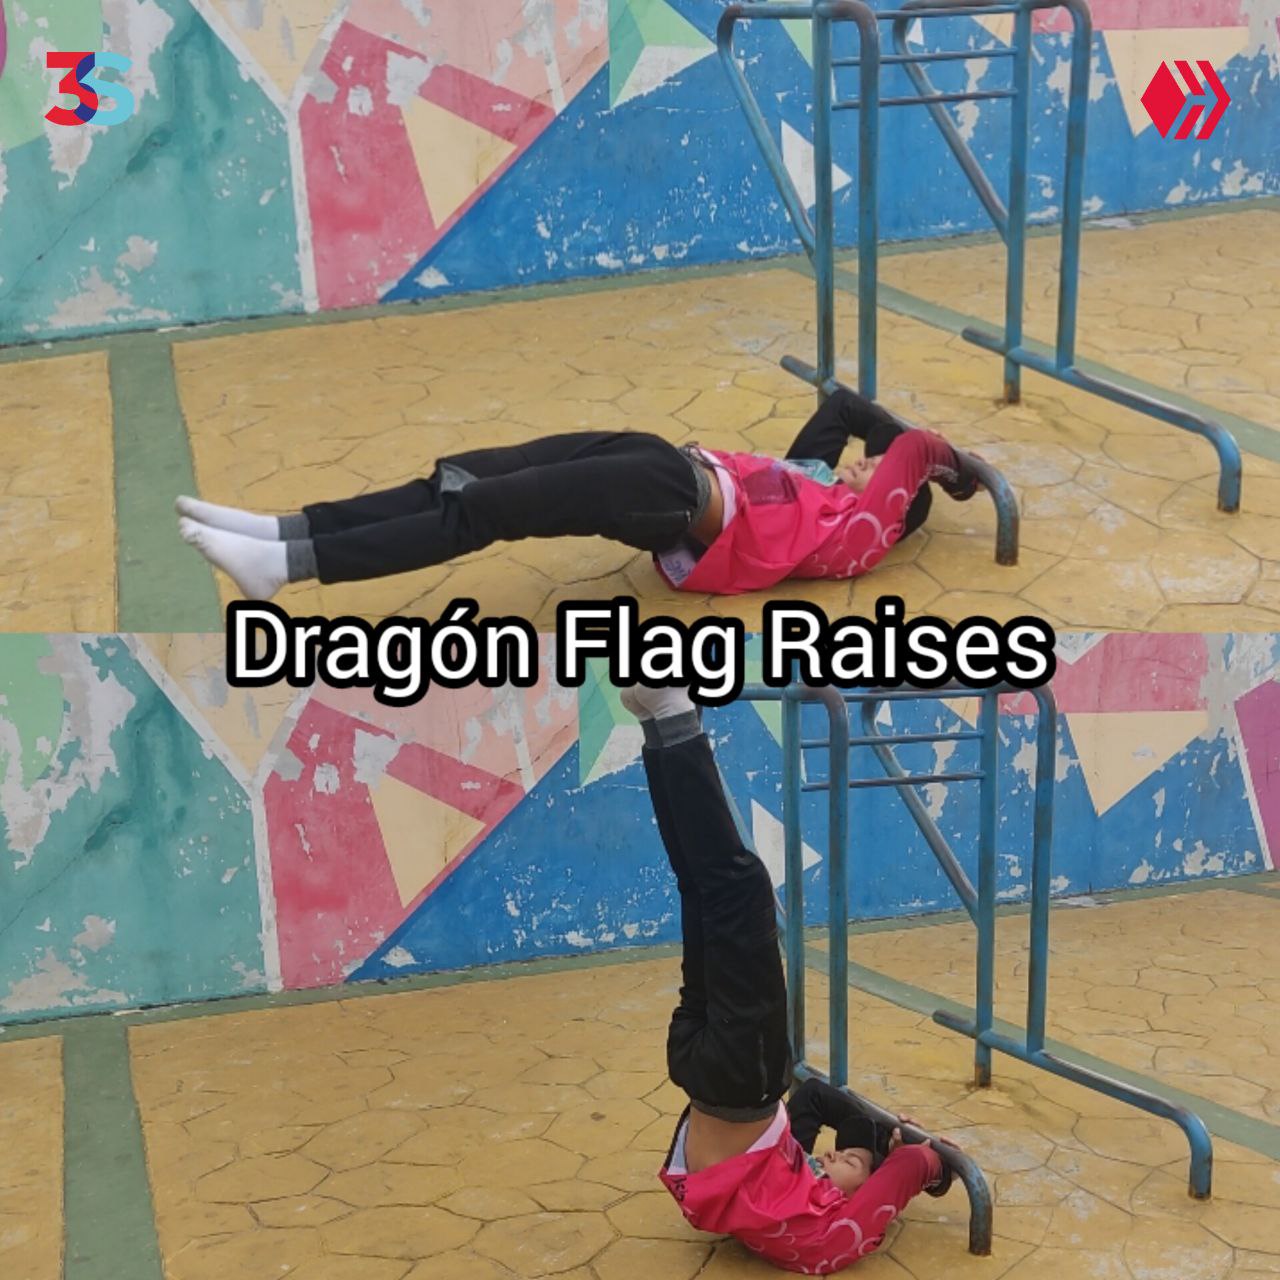 Dragon Flag Raises.jpg